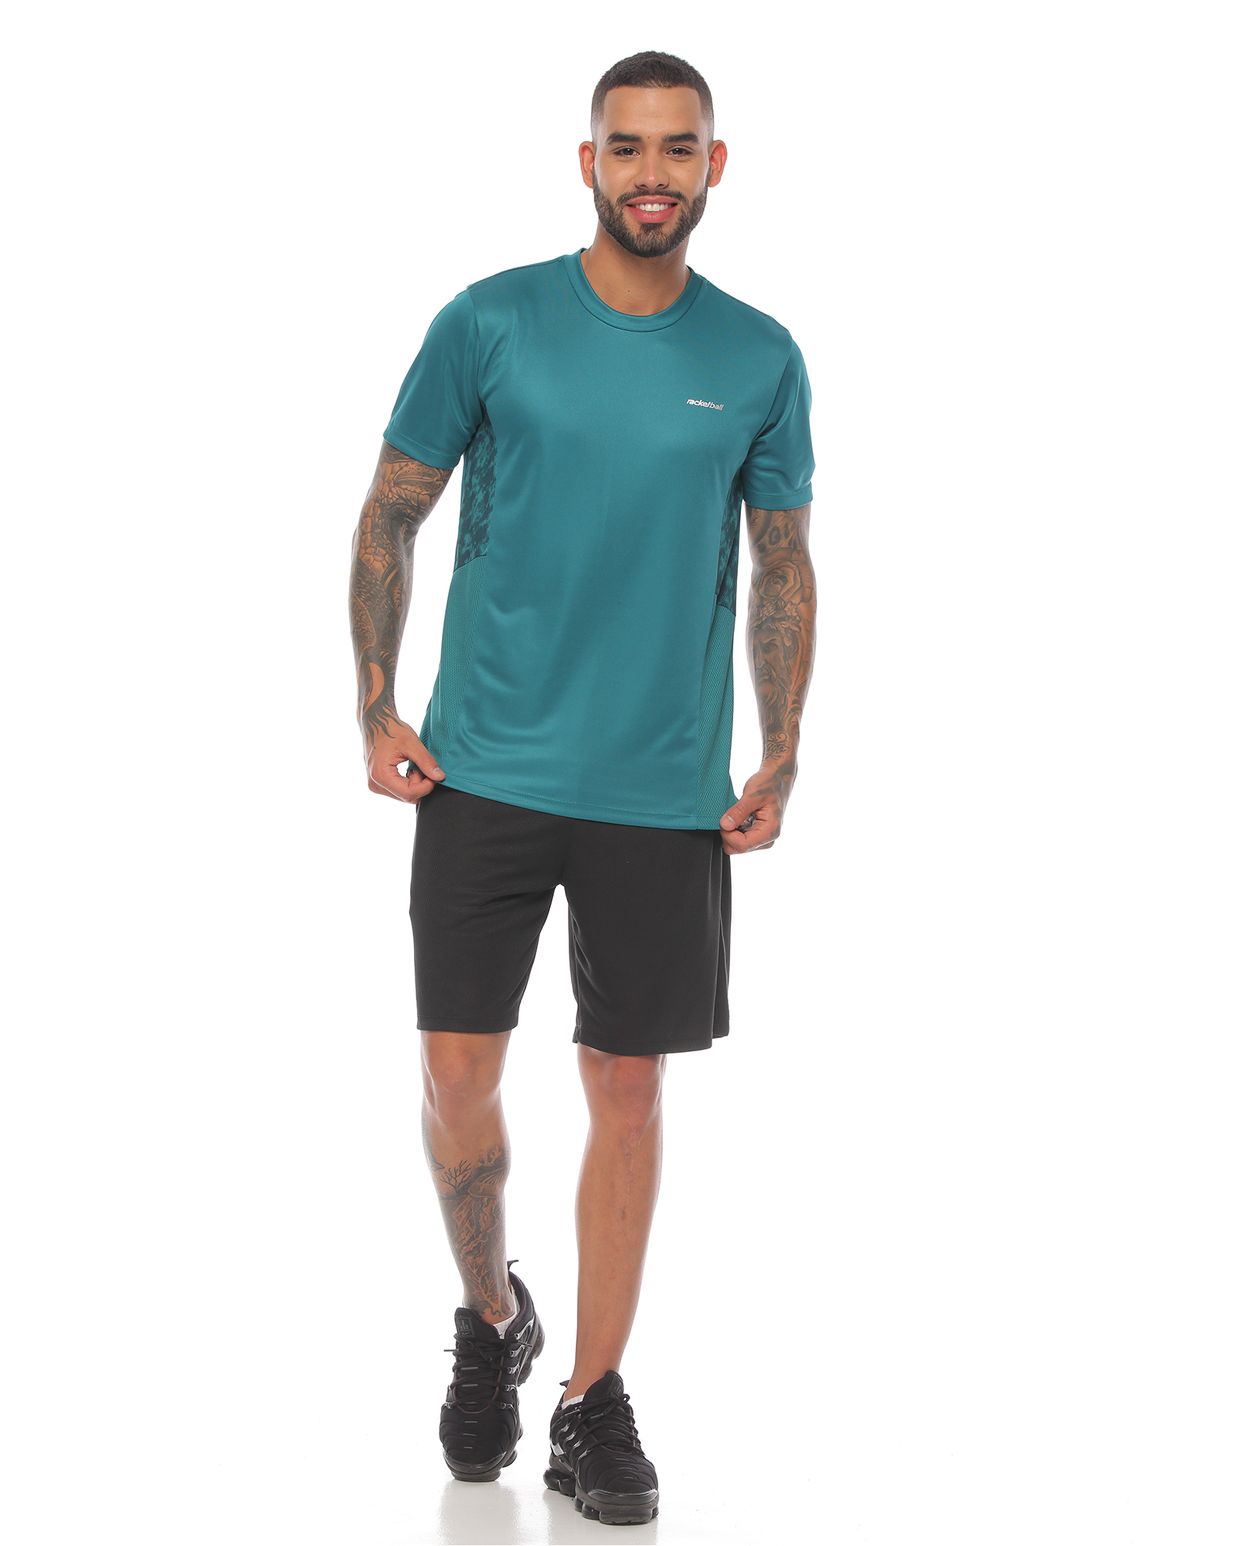 modelo con camiseta deportiva manga corta color verde y pantaloneta deportiva negra para hombre